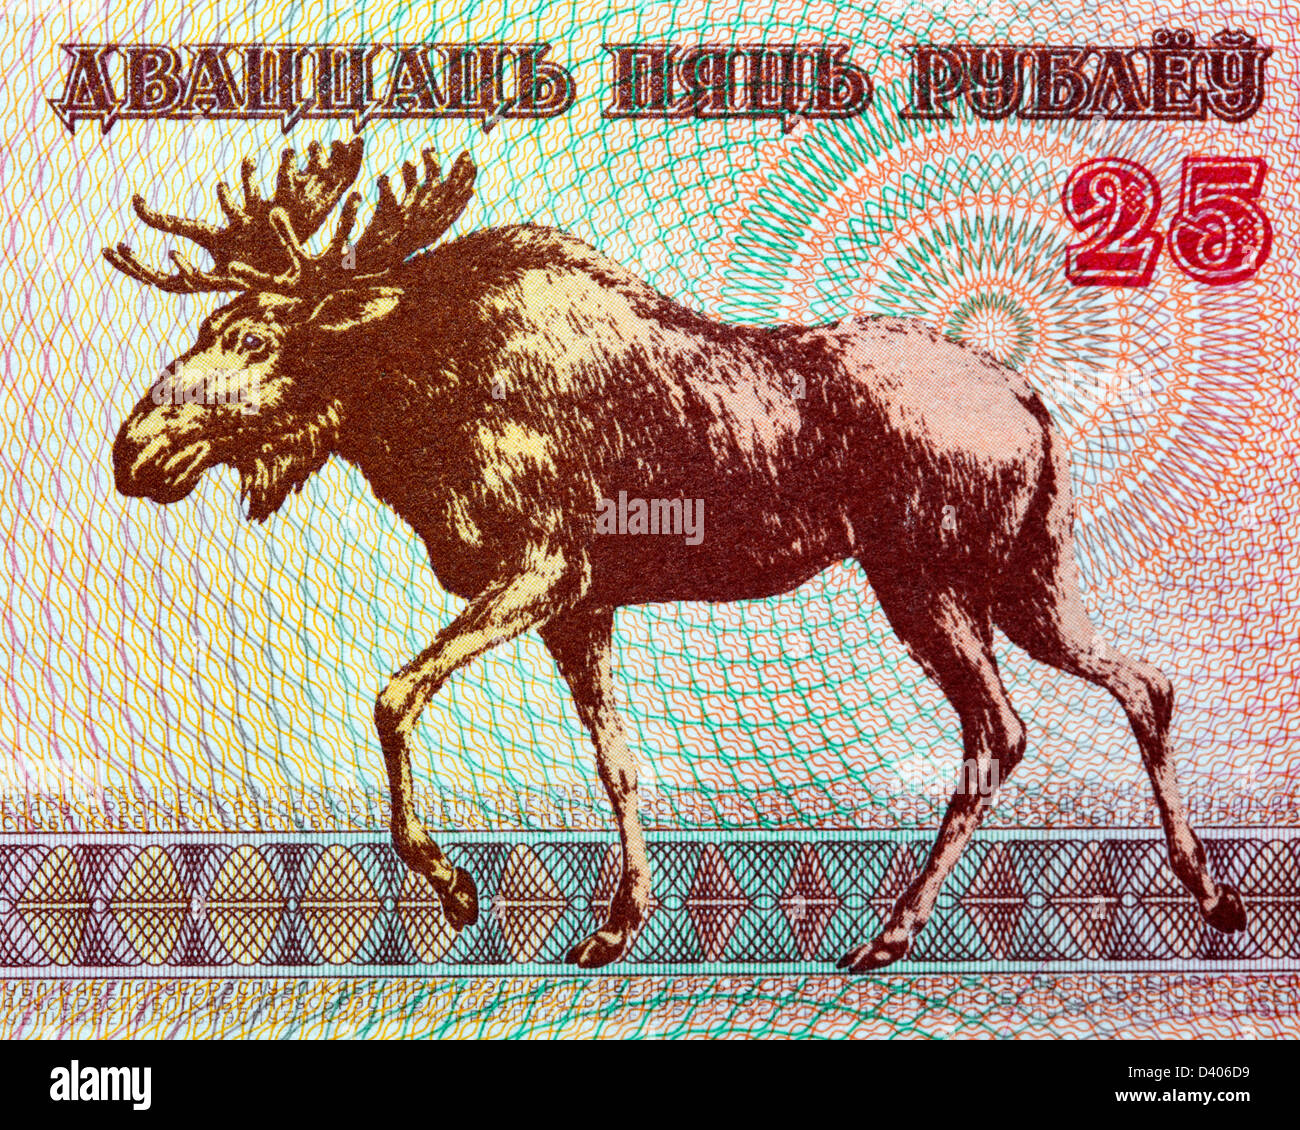 25 rubles banknote, Moose, Belarus, 1992 Stock Photo